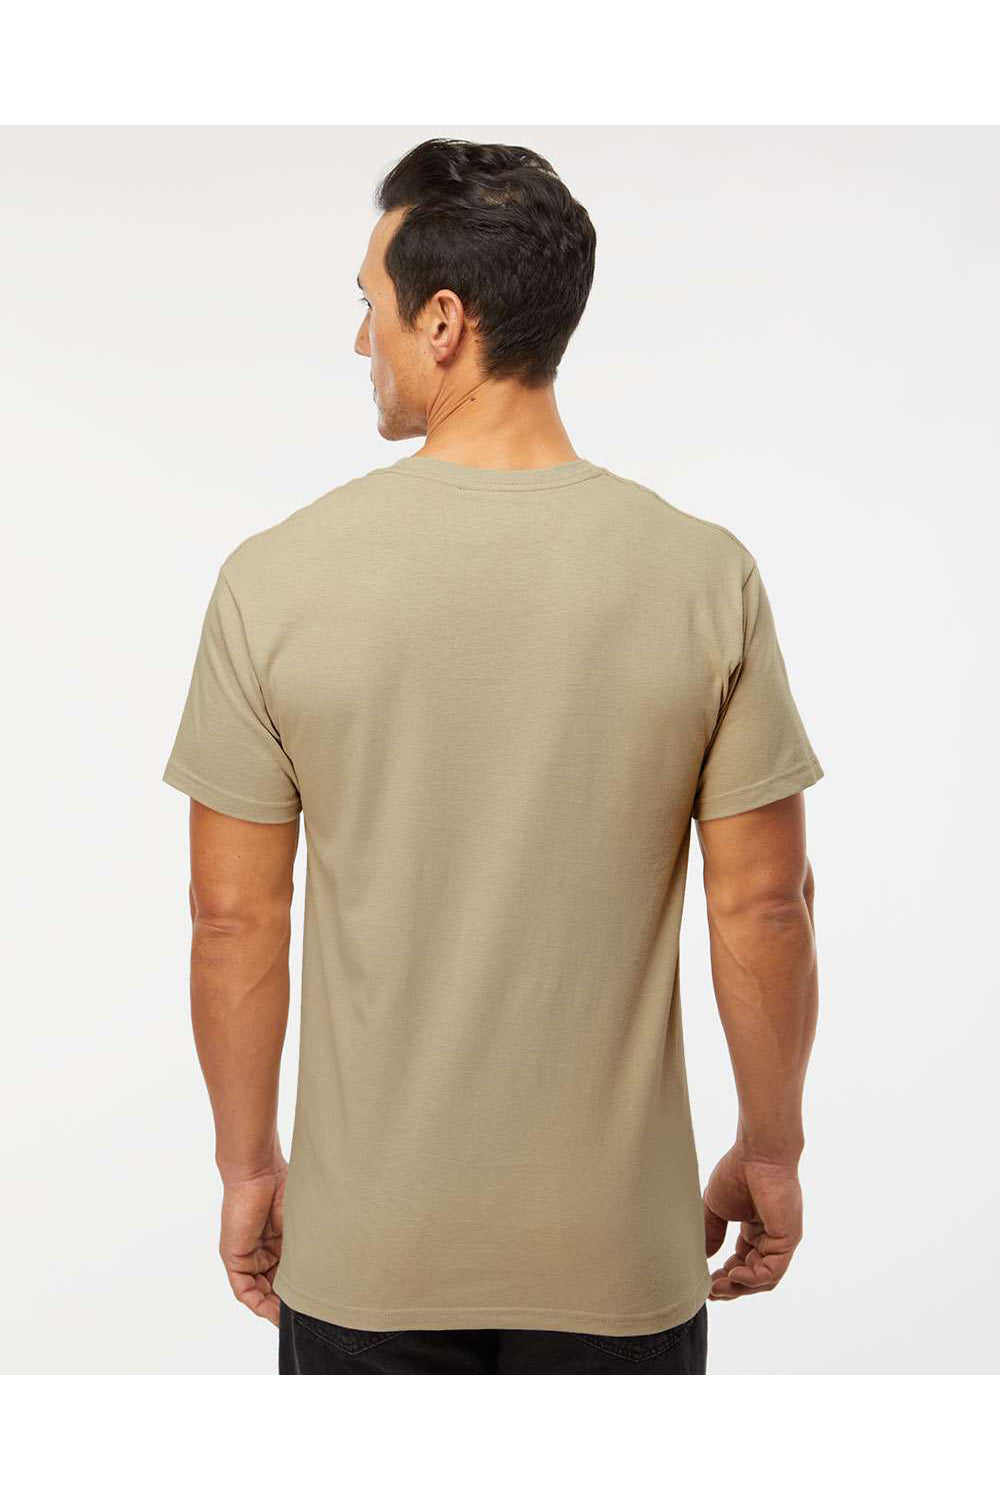 M&O 4800 Mens Gold Soft Touch Short Sleeve Crewneck T-Shirt Sand Model Back